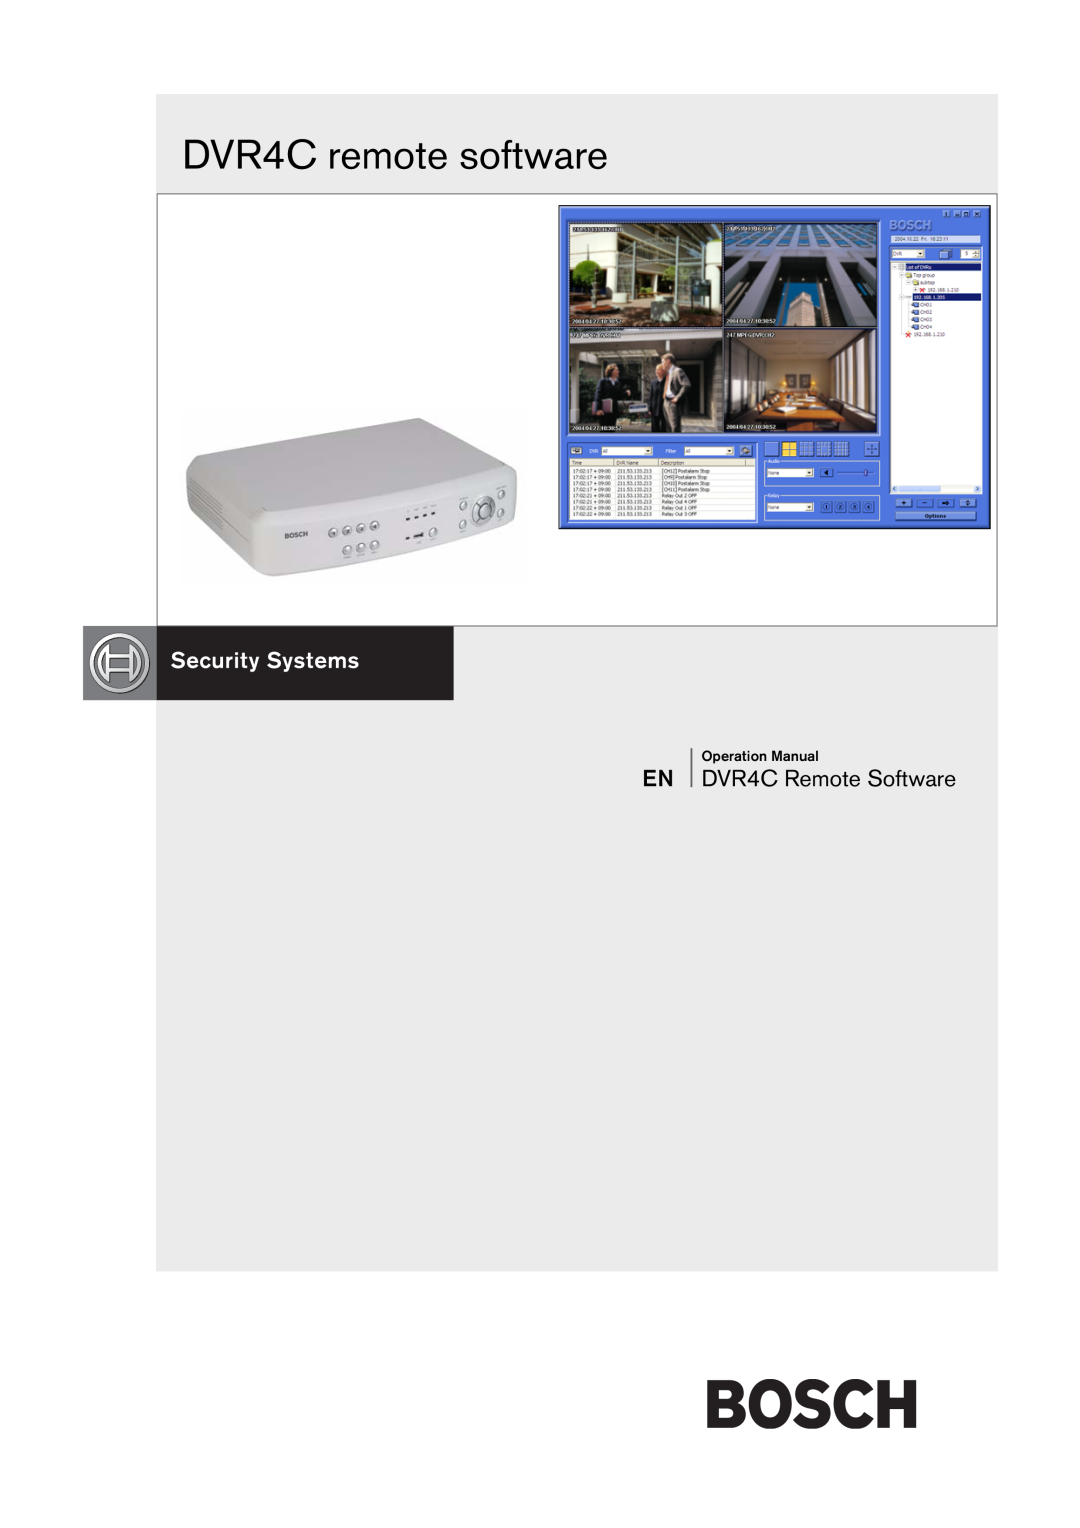 Bosch Appliances operation manual DVR4C remote software, DVR4C Remote Software 